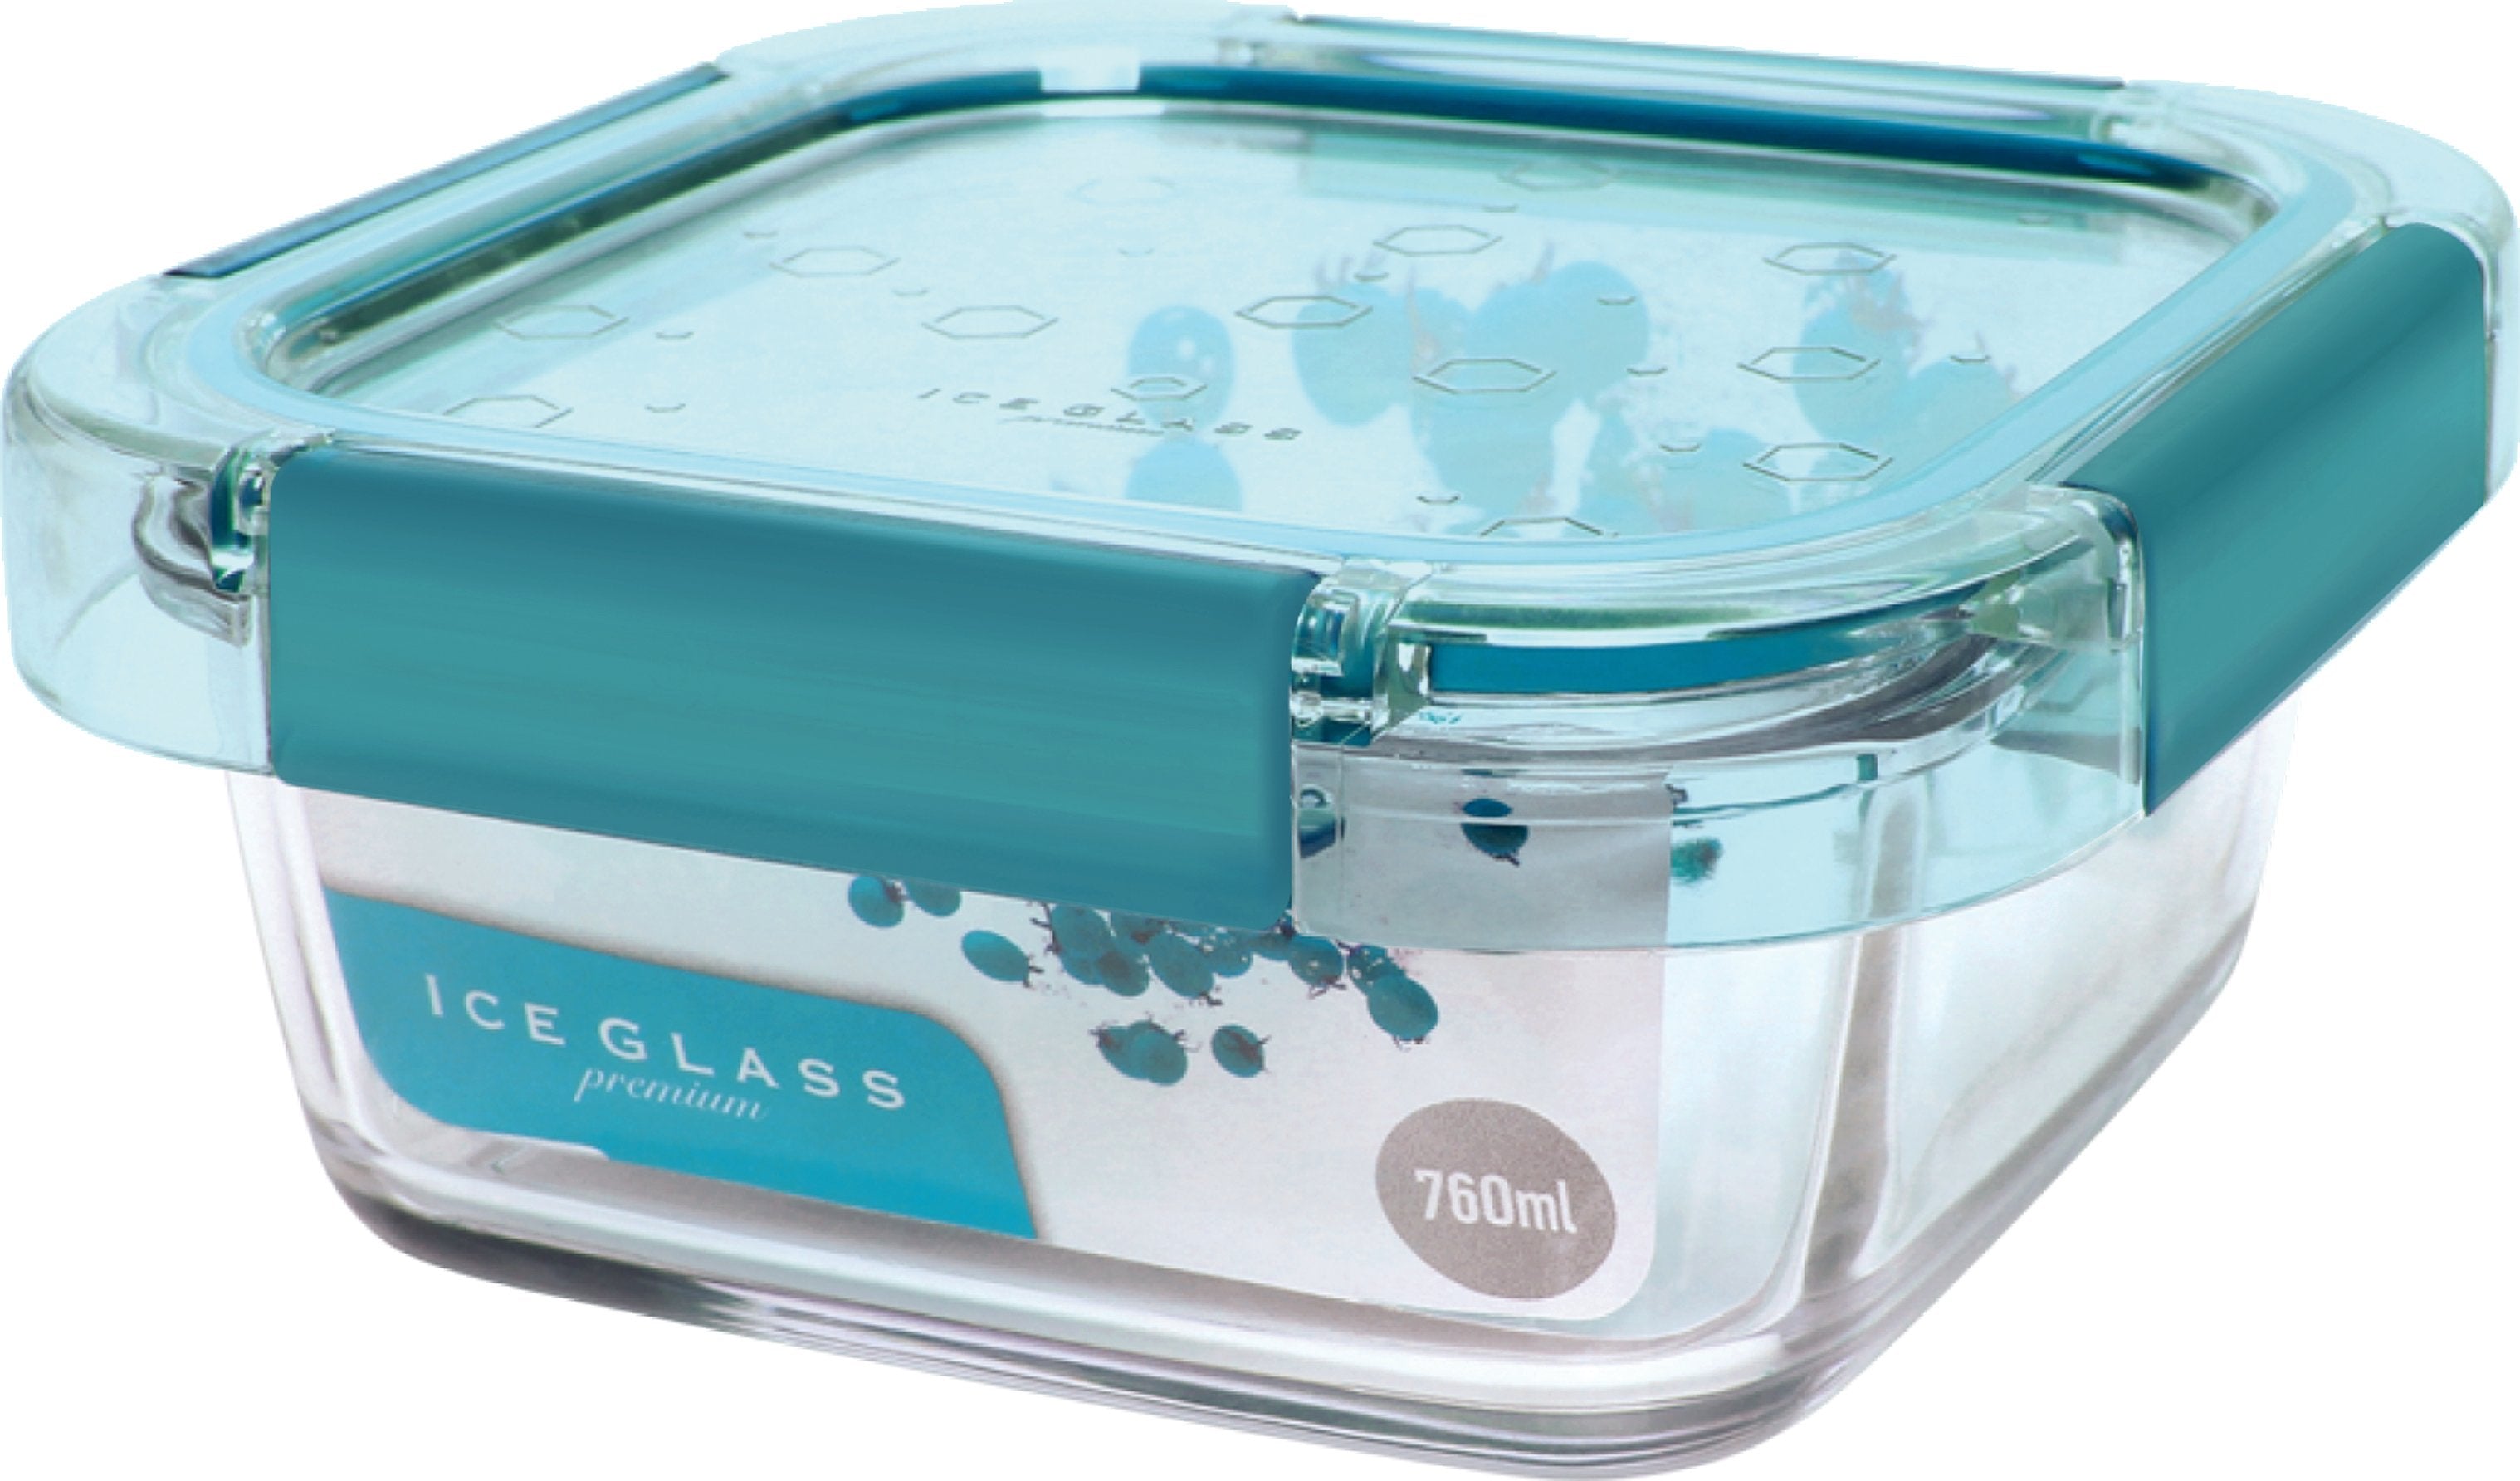 Komax Ice Glass Premium Square Food Storage Container, 760 ml (Mint)